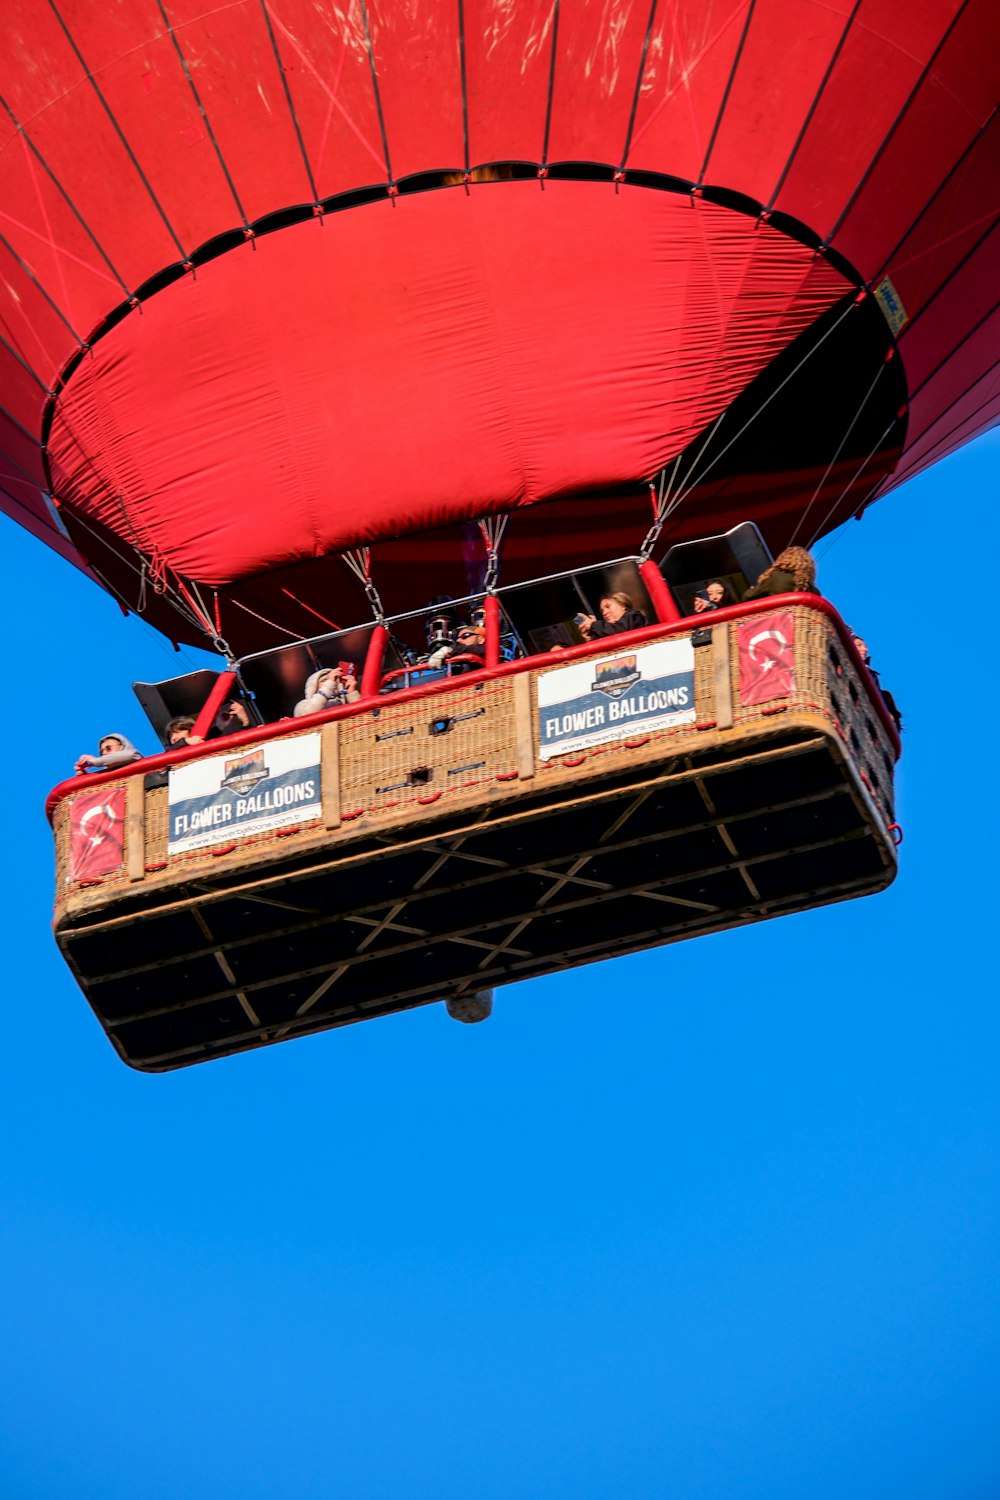 a red hot air balloon flying through a blue sky